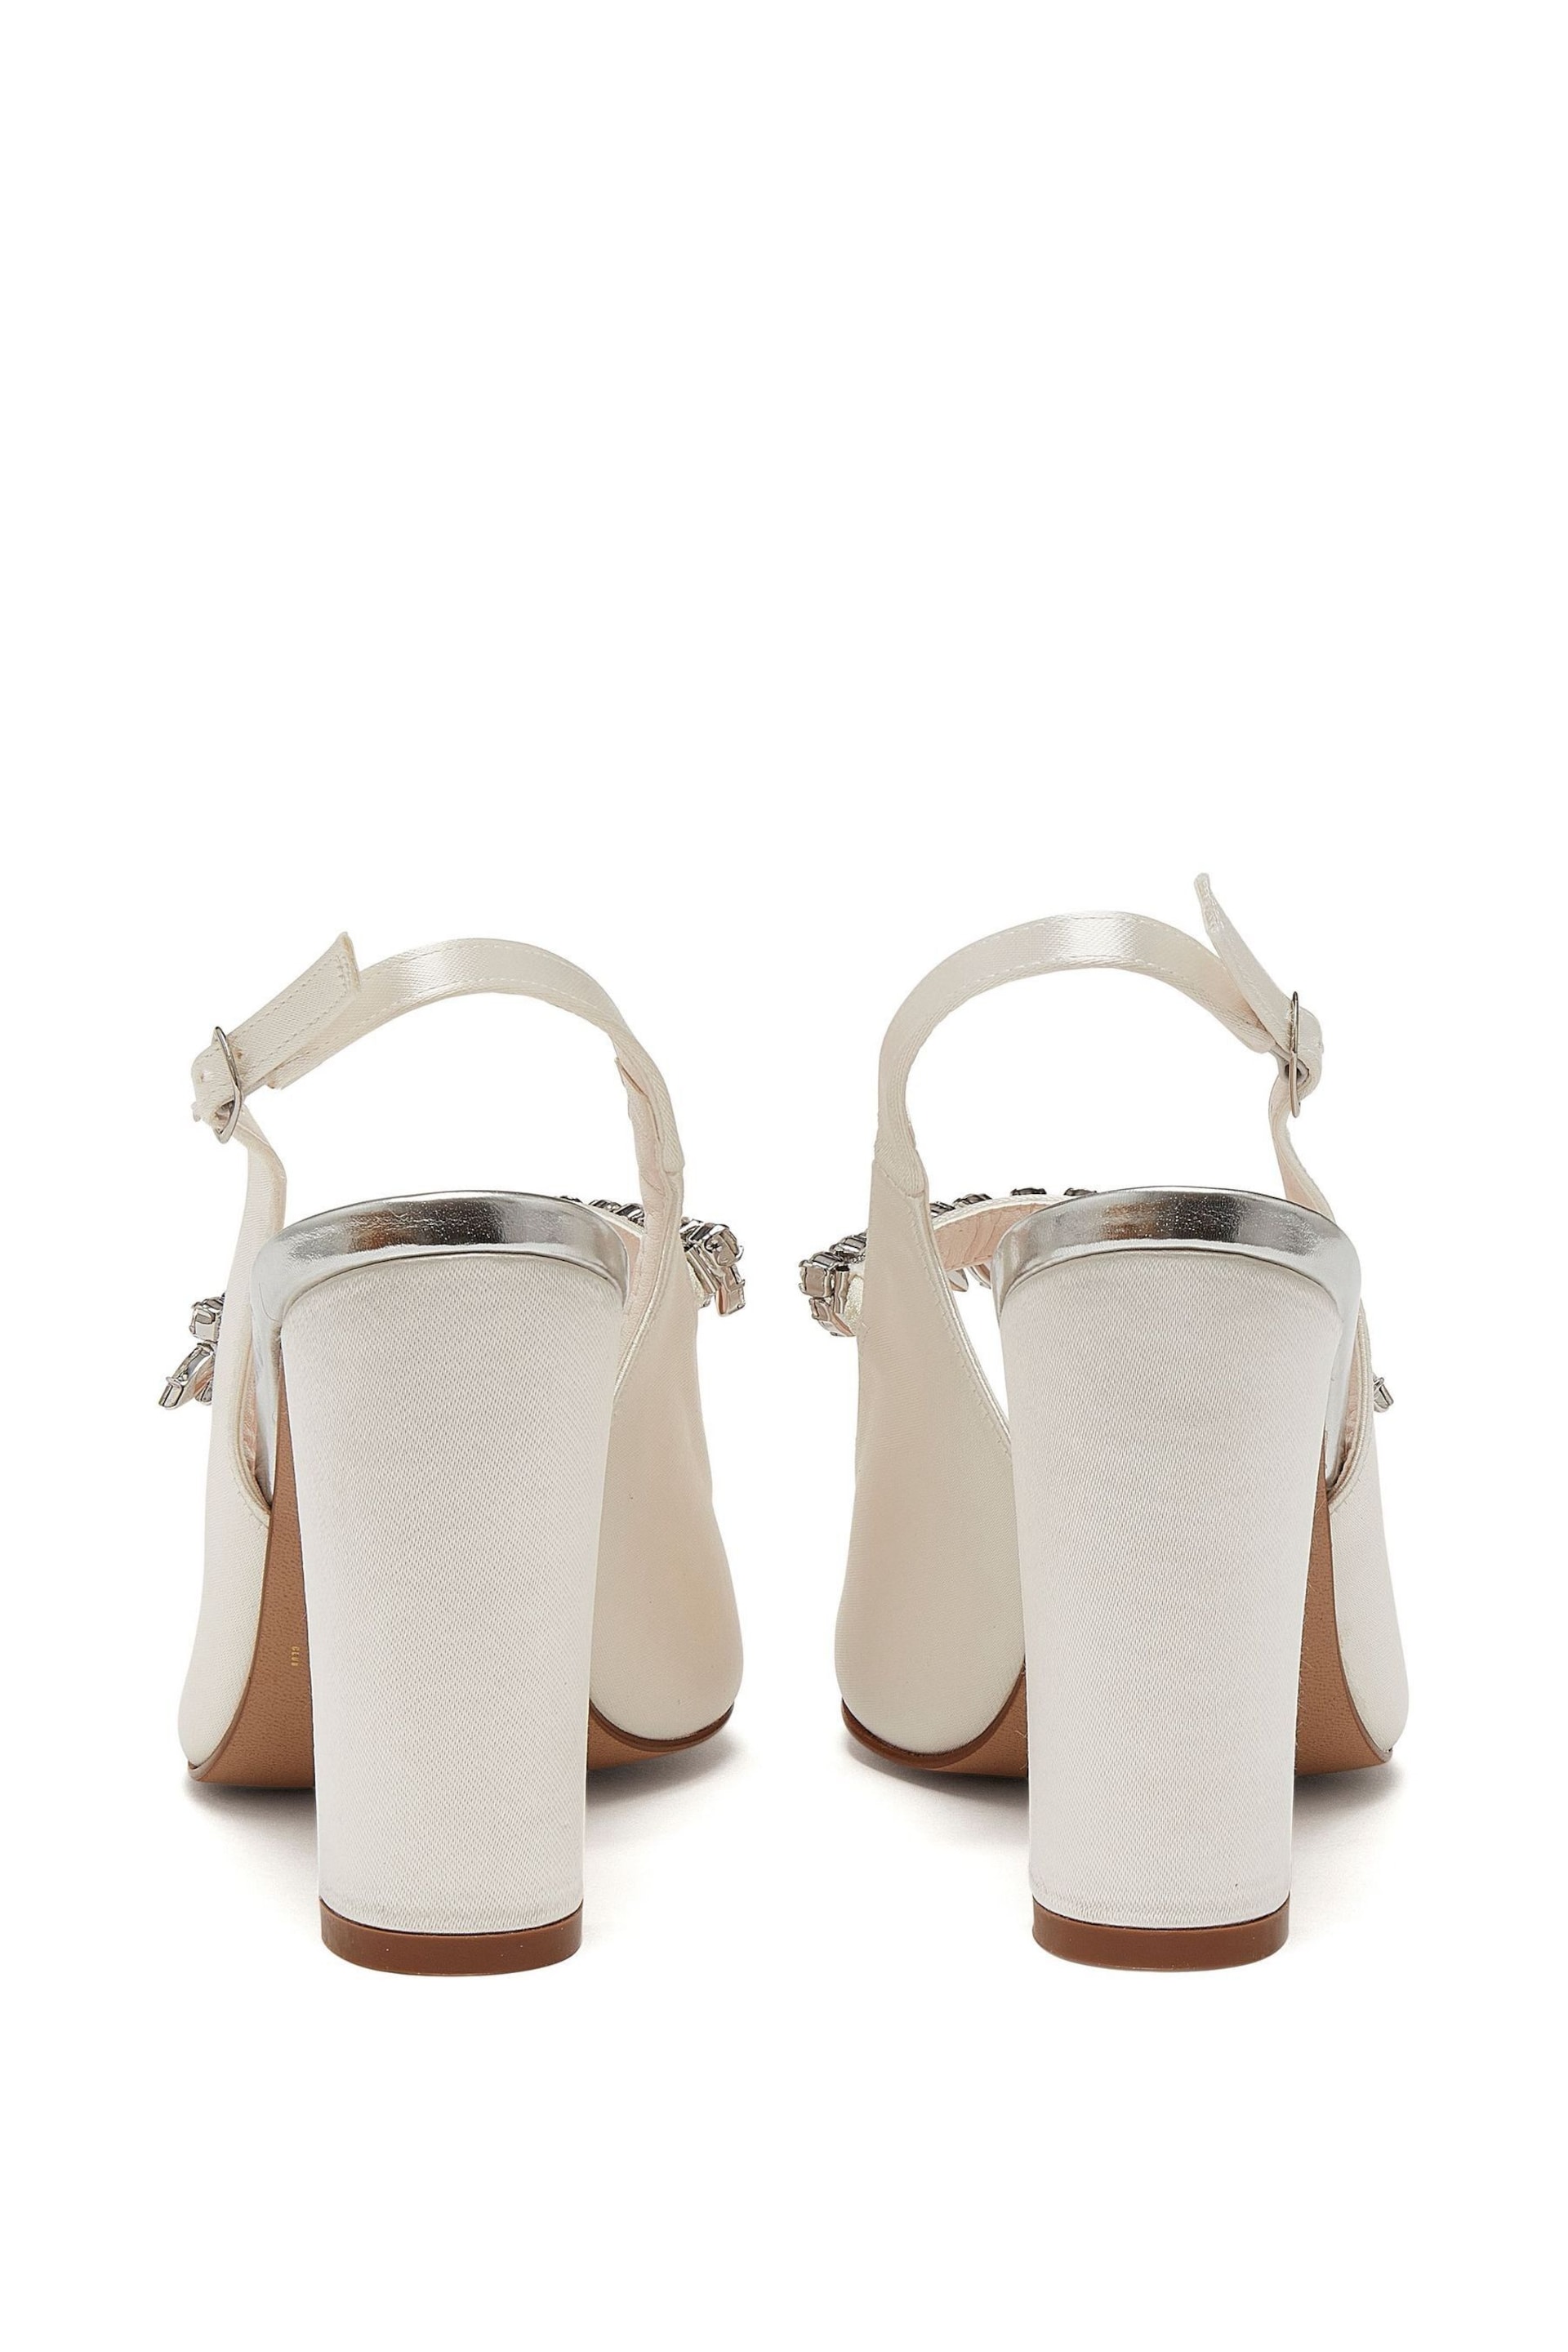 Rainbow Club Cream Freya Bridal Sparkly Slingback Wedding Shoes - Image 3 of 4